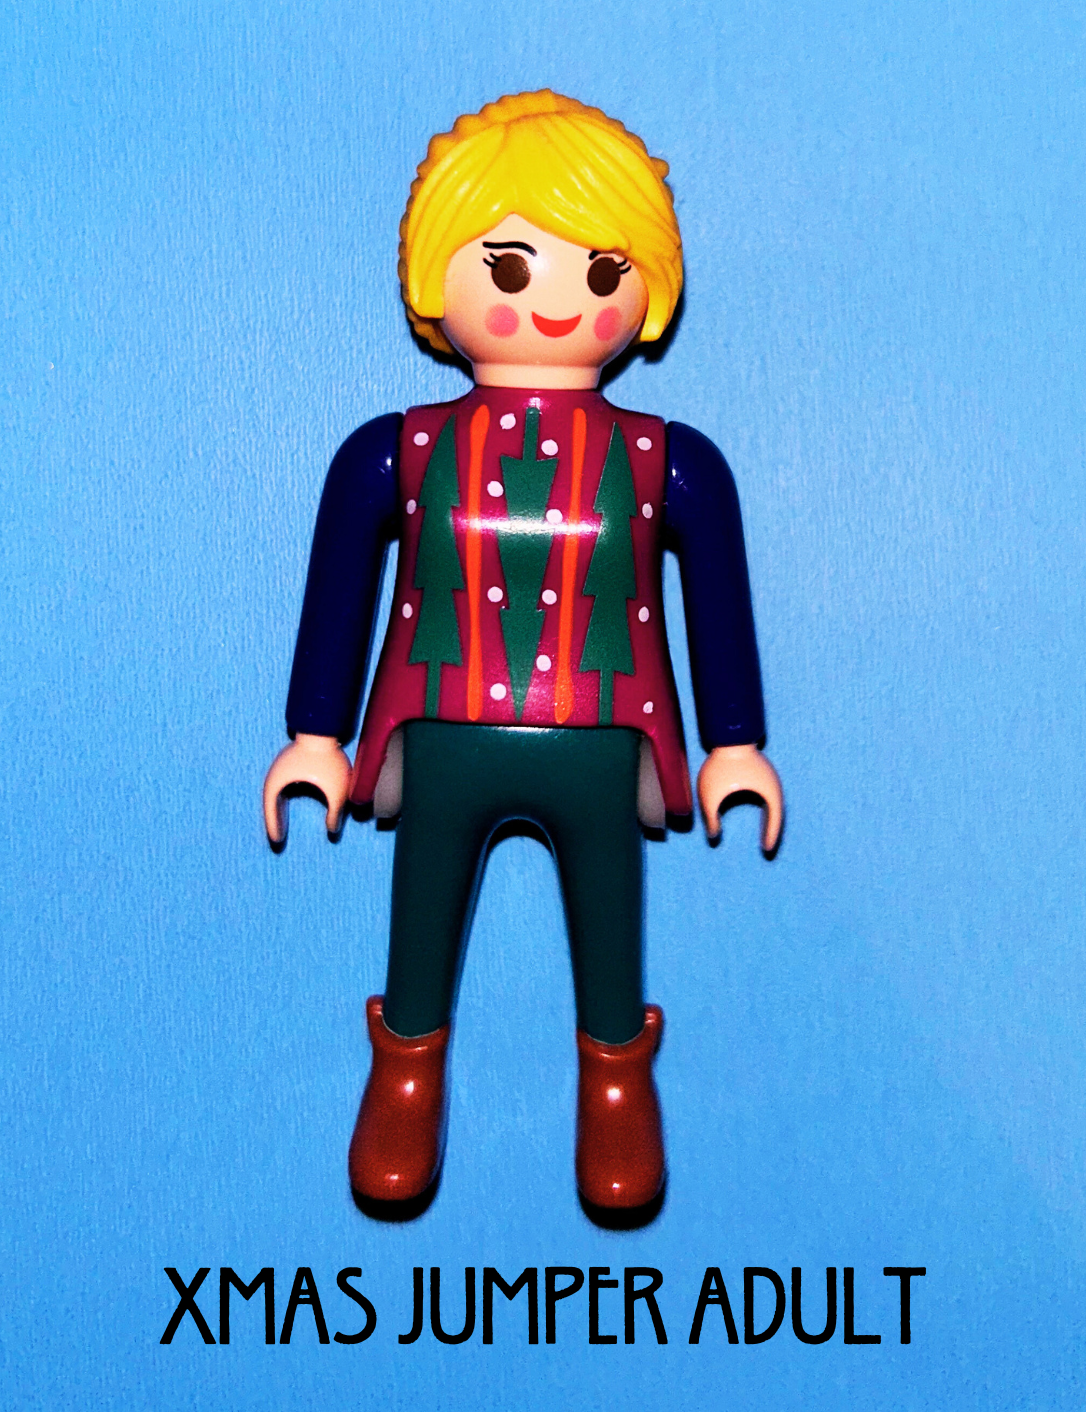 Xmas Jumper Adult Playmobil Figure